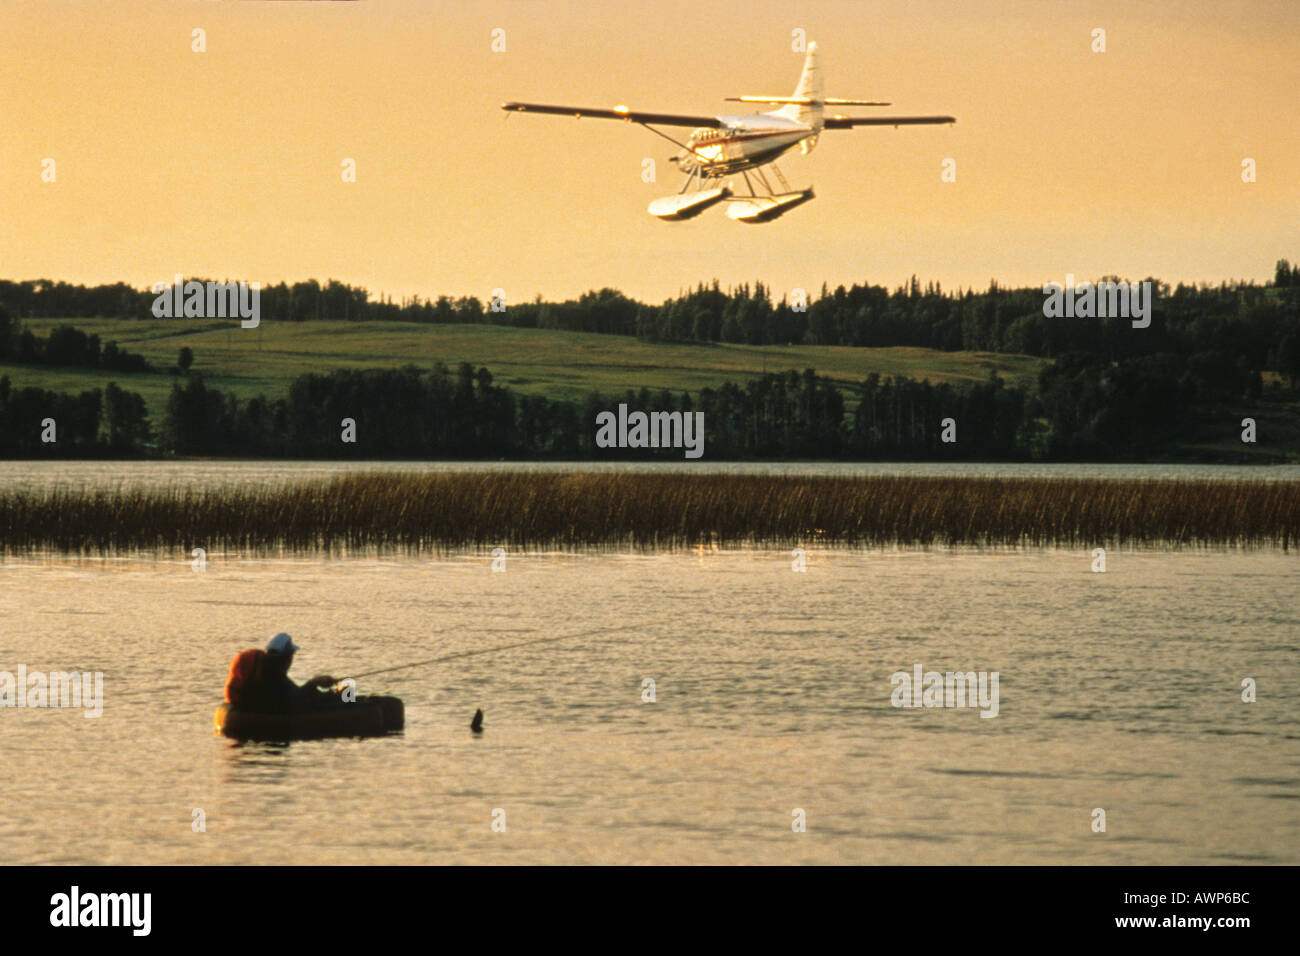 Fisherman and floatplane Stock Photo